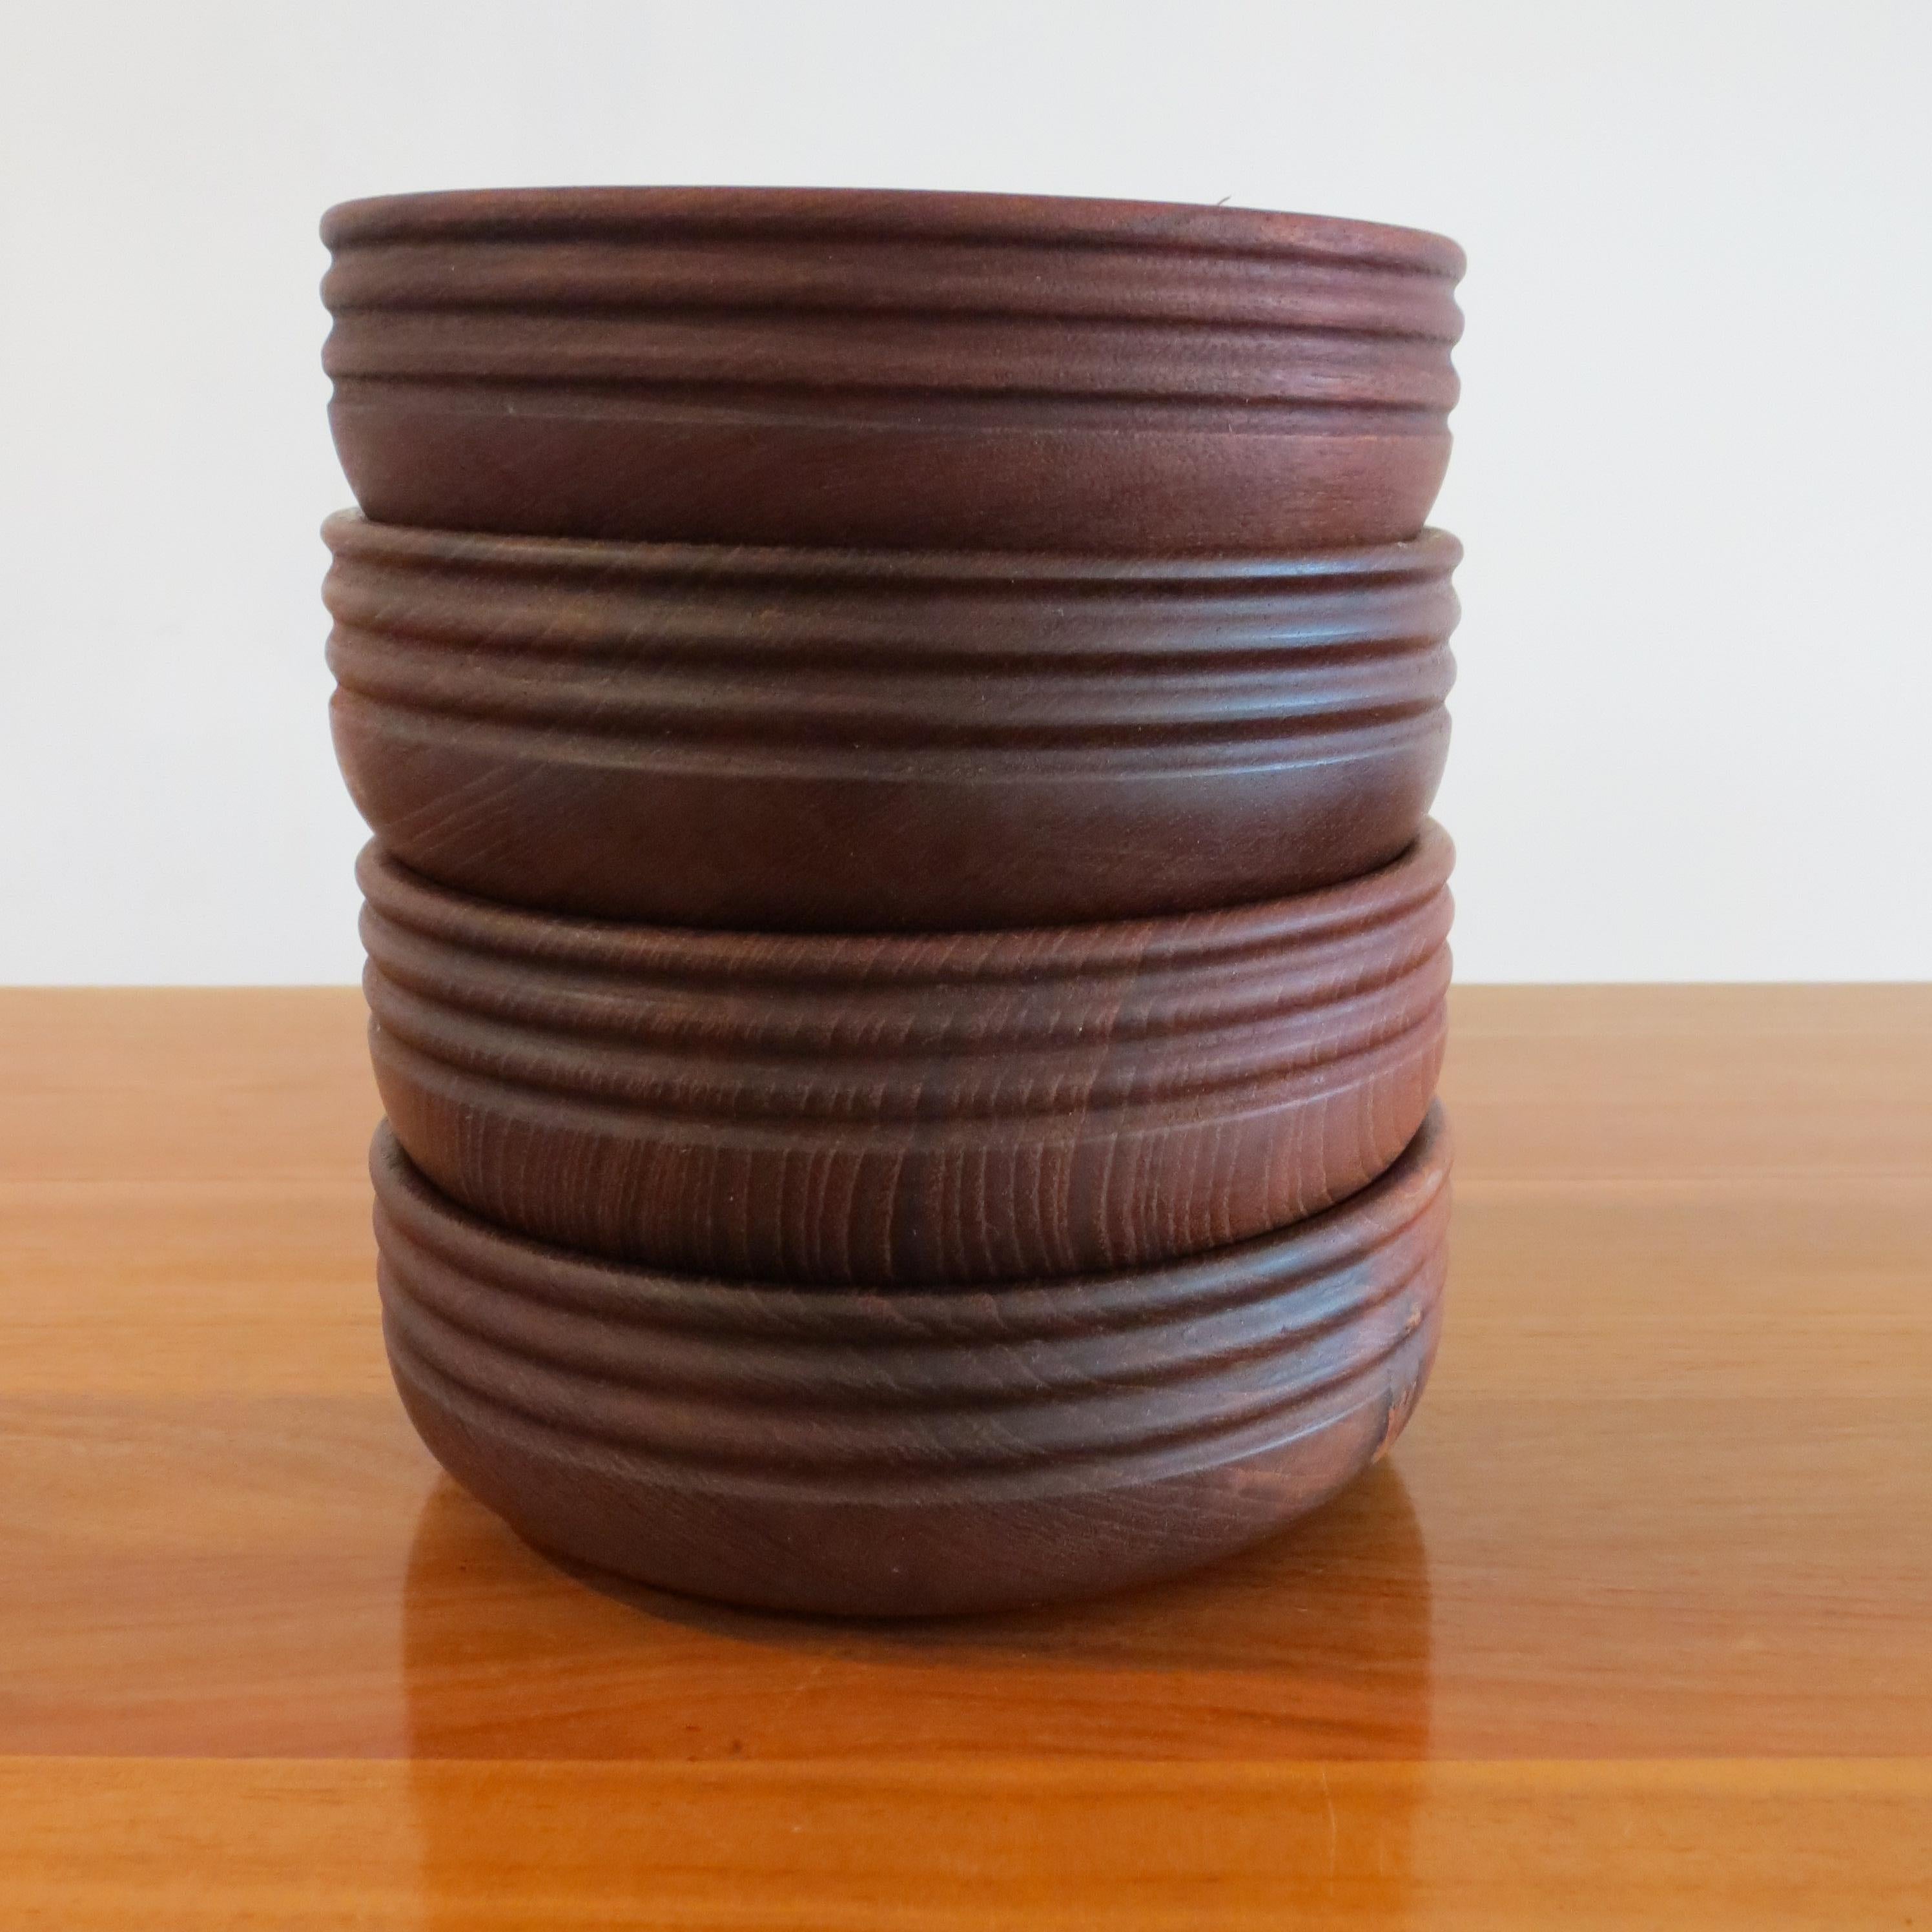 English Set of 4 Vintage Handmade Teak Wooden Bowls by Galatix